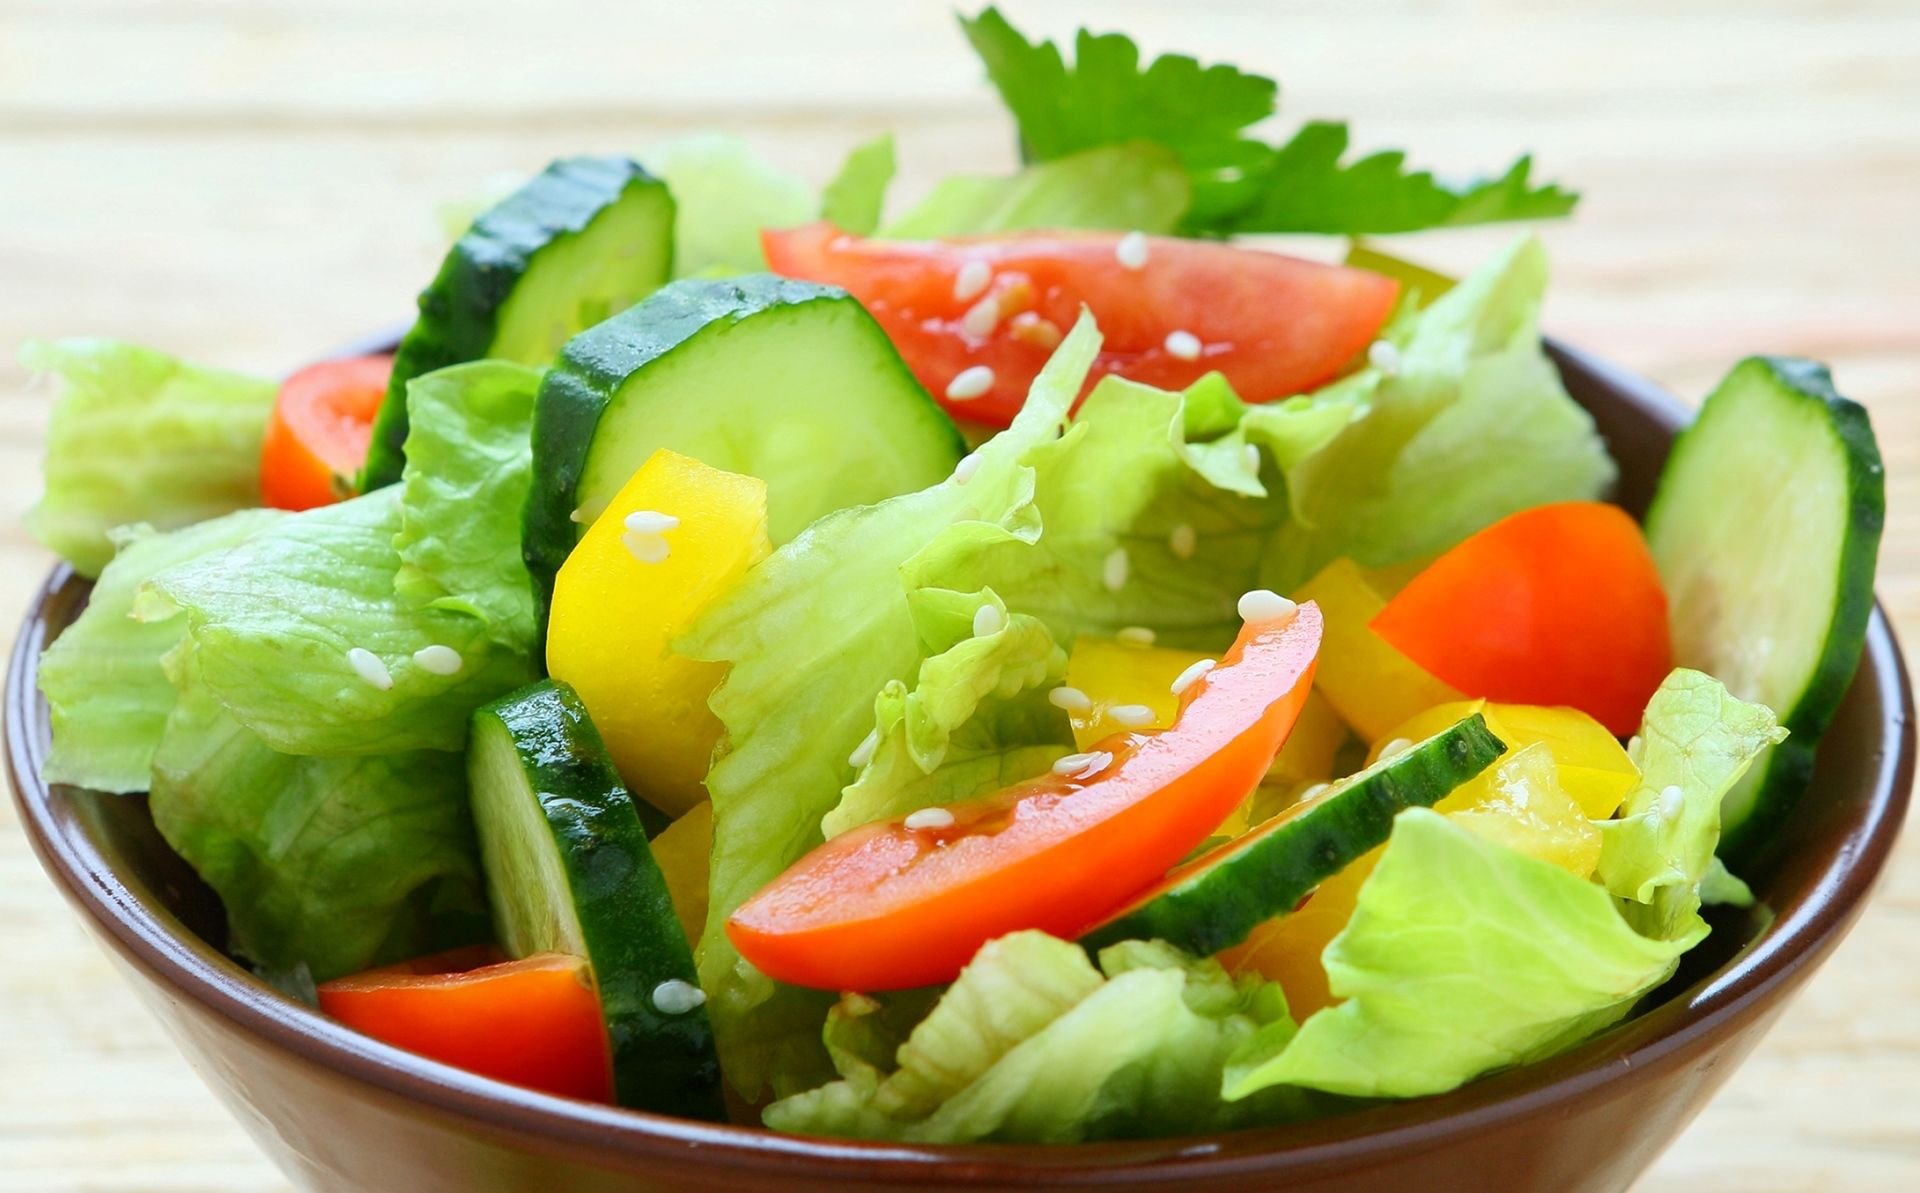 Salat. Салат. Салат из овощей. Салат из сырых овощей. Легкий овощной салат.